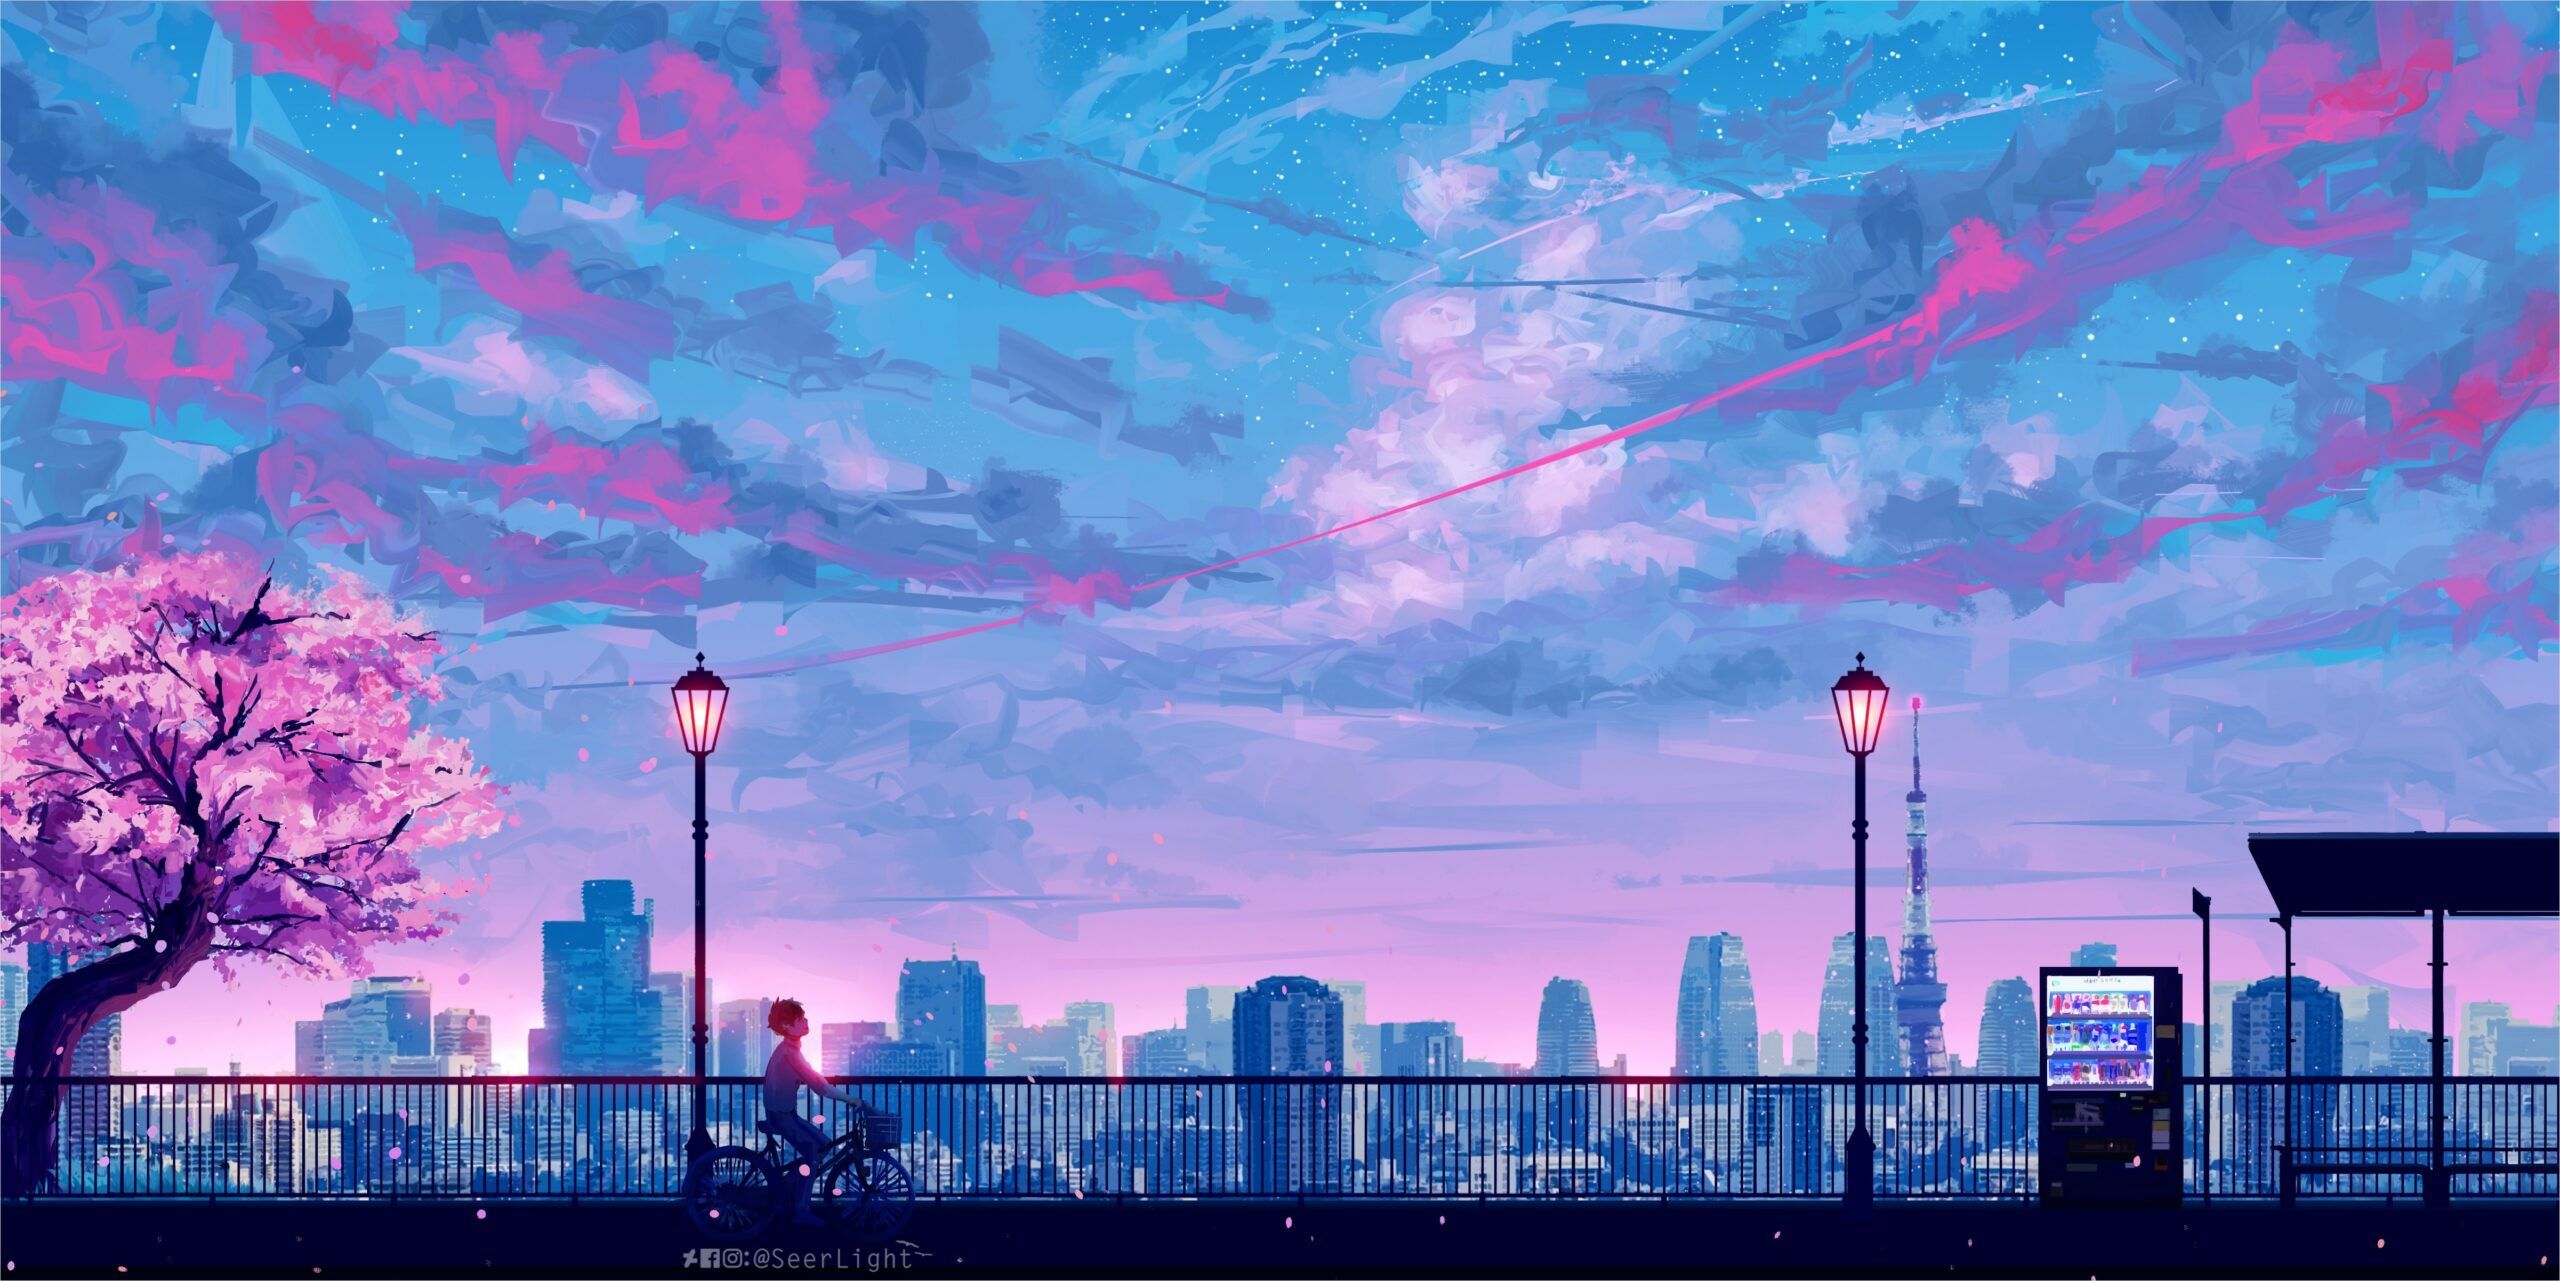 4k Anime Landscape Wallpaper. Desktop wallpaper art, Cityscape wallpaper, Scenery wallpaper